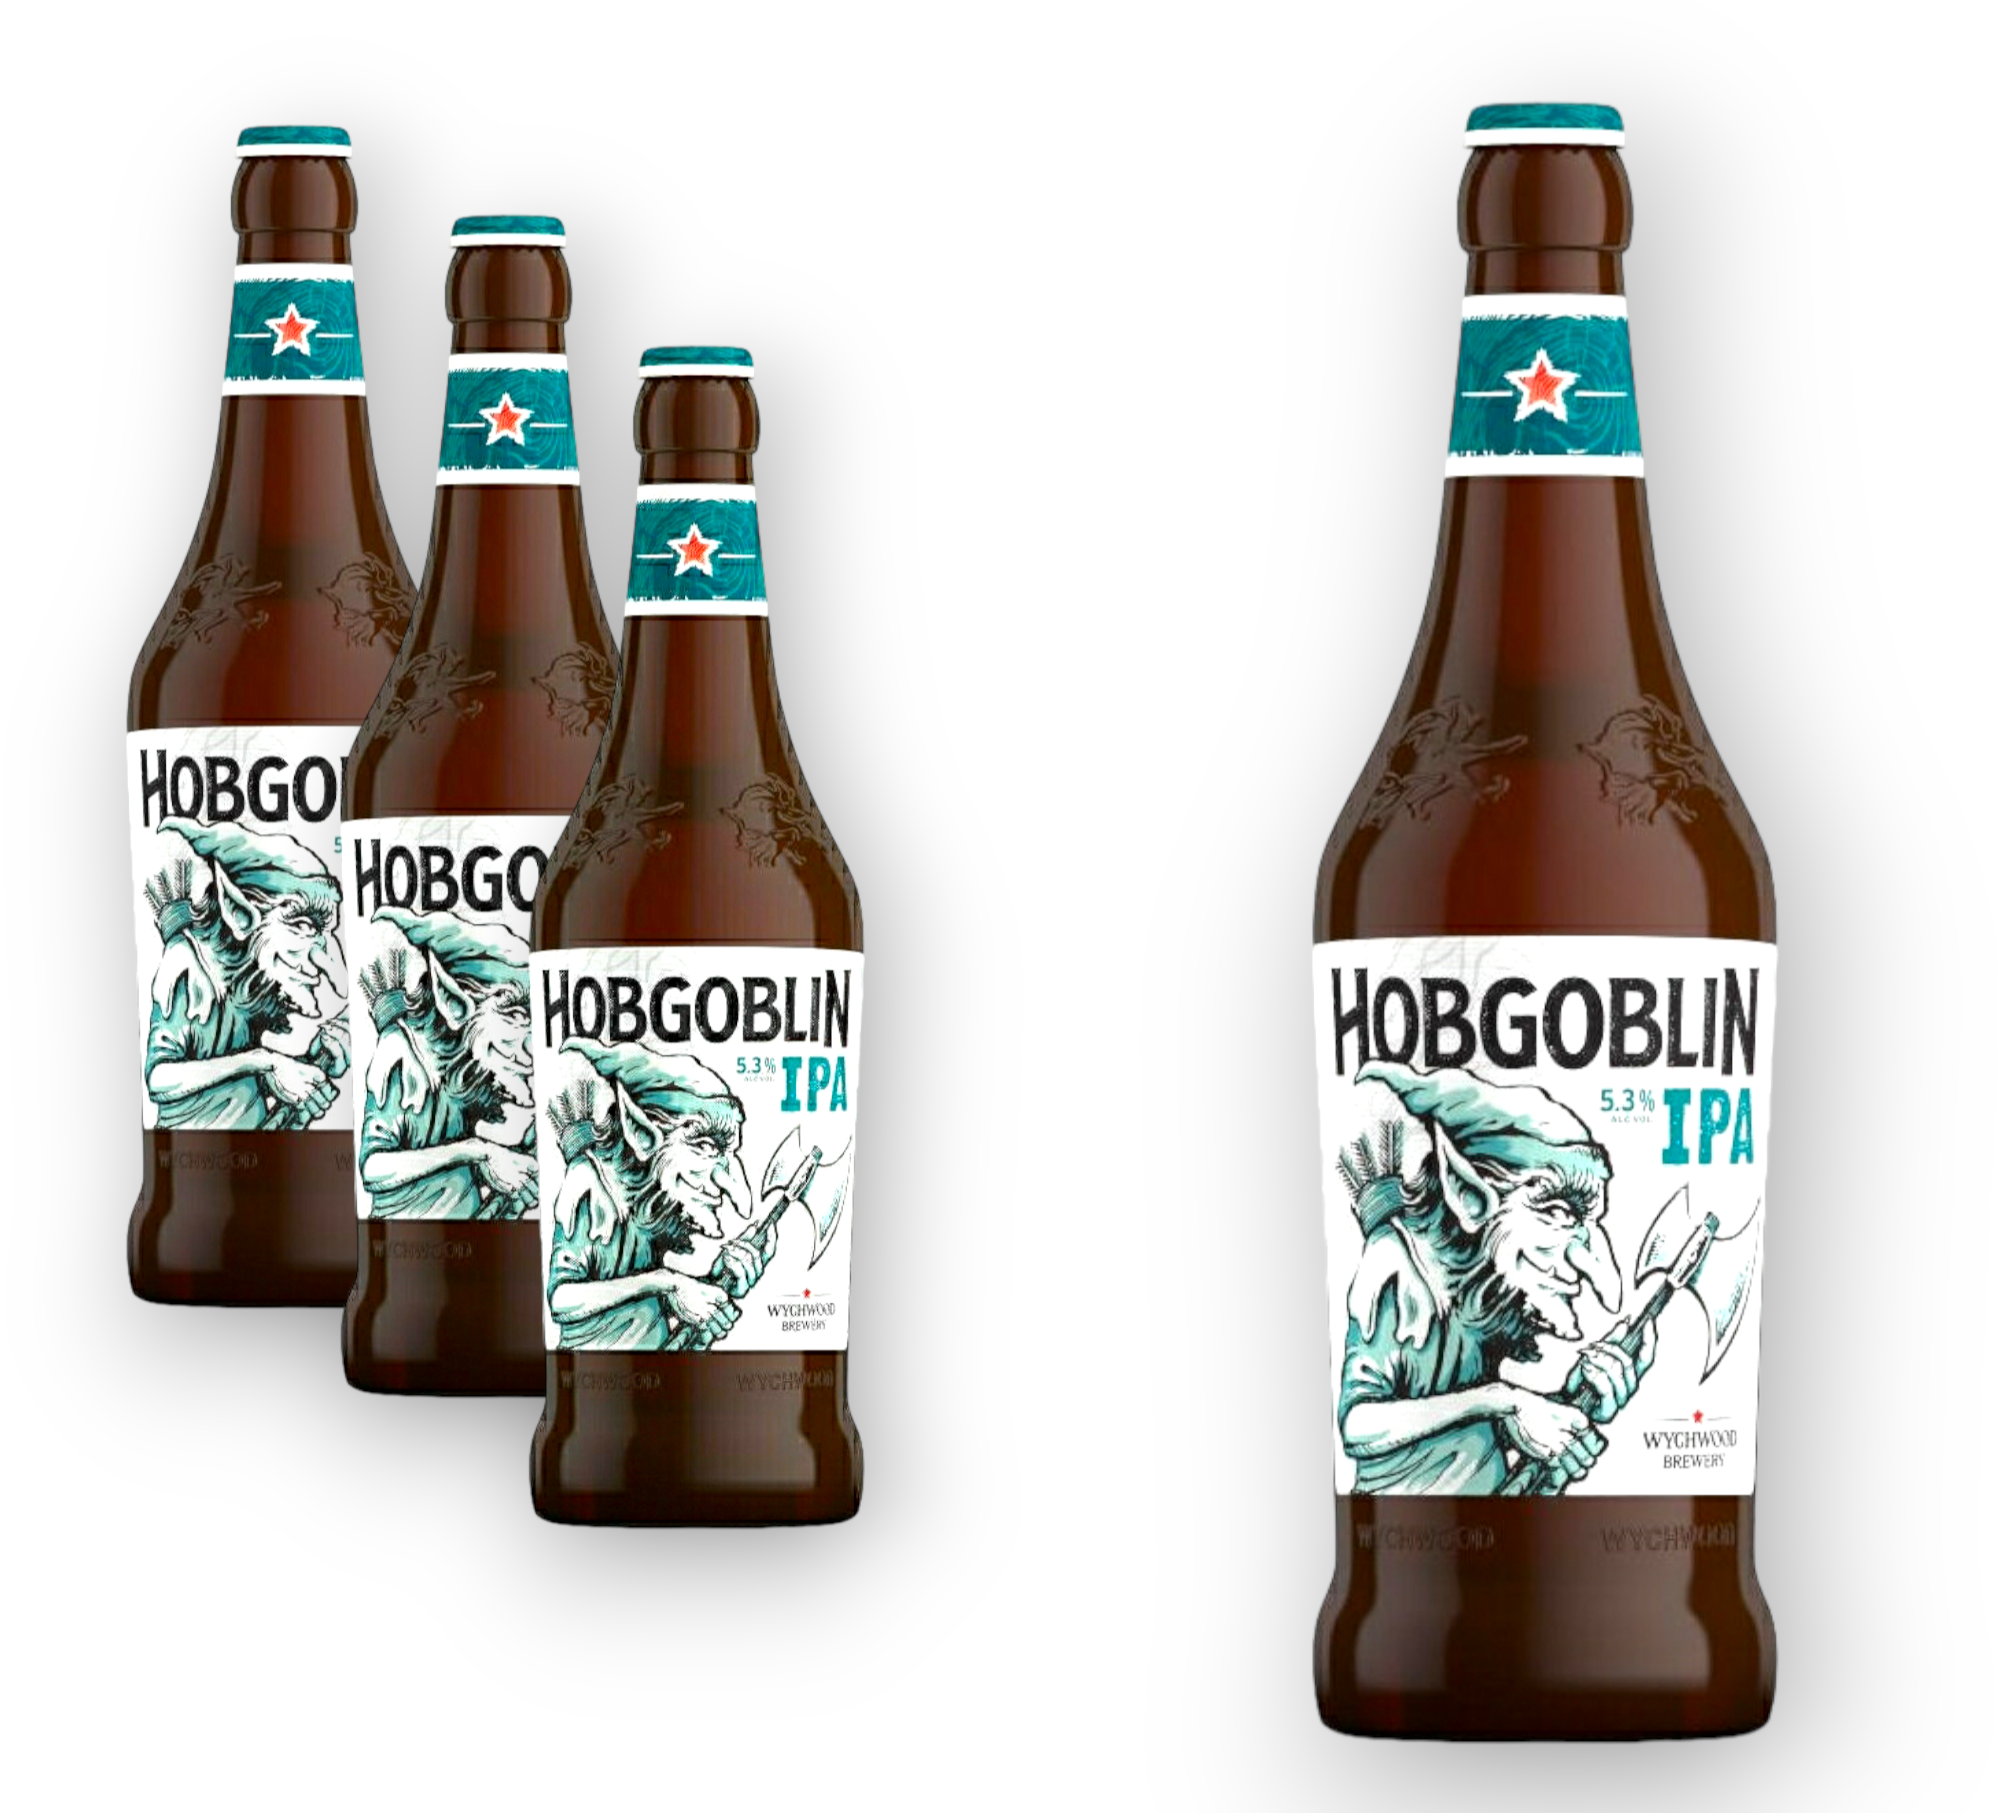 Wychwood Hobgoblin IPA 0,5l- Wychwoods Brewery IPA mit 5,3% Vol.